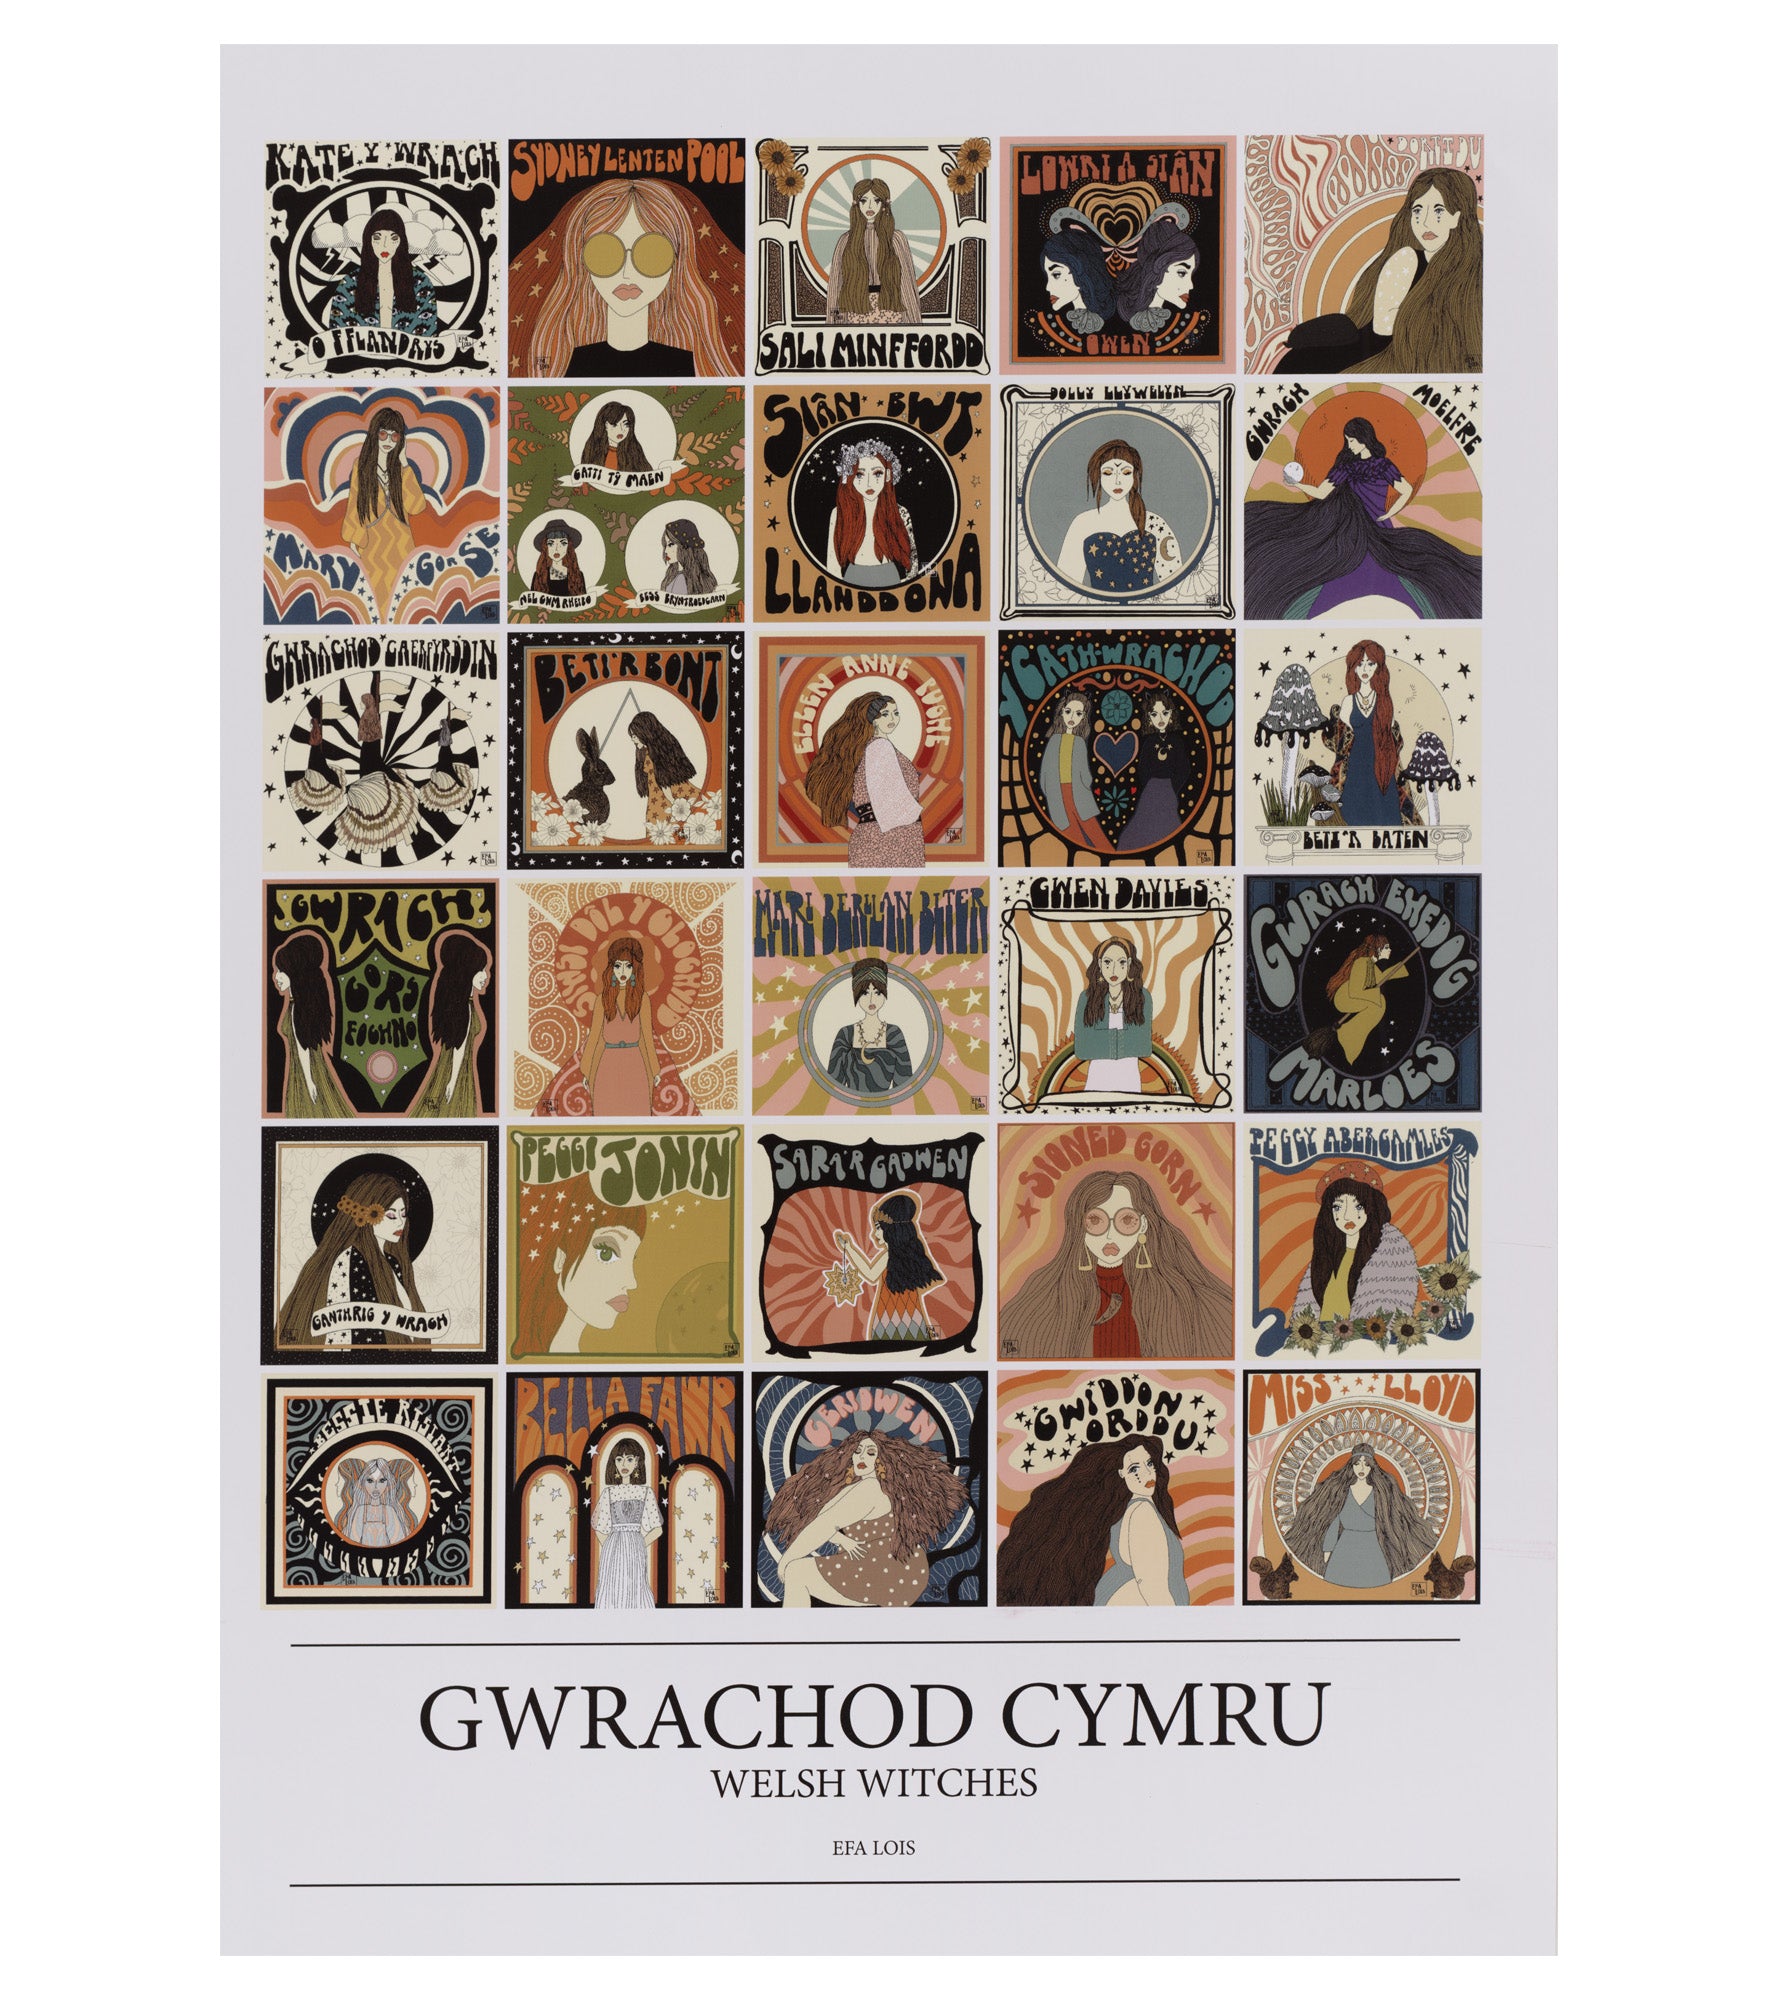 'Gwrachod Cymru' (Welsh Witches) Poster by Efa Lois